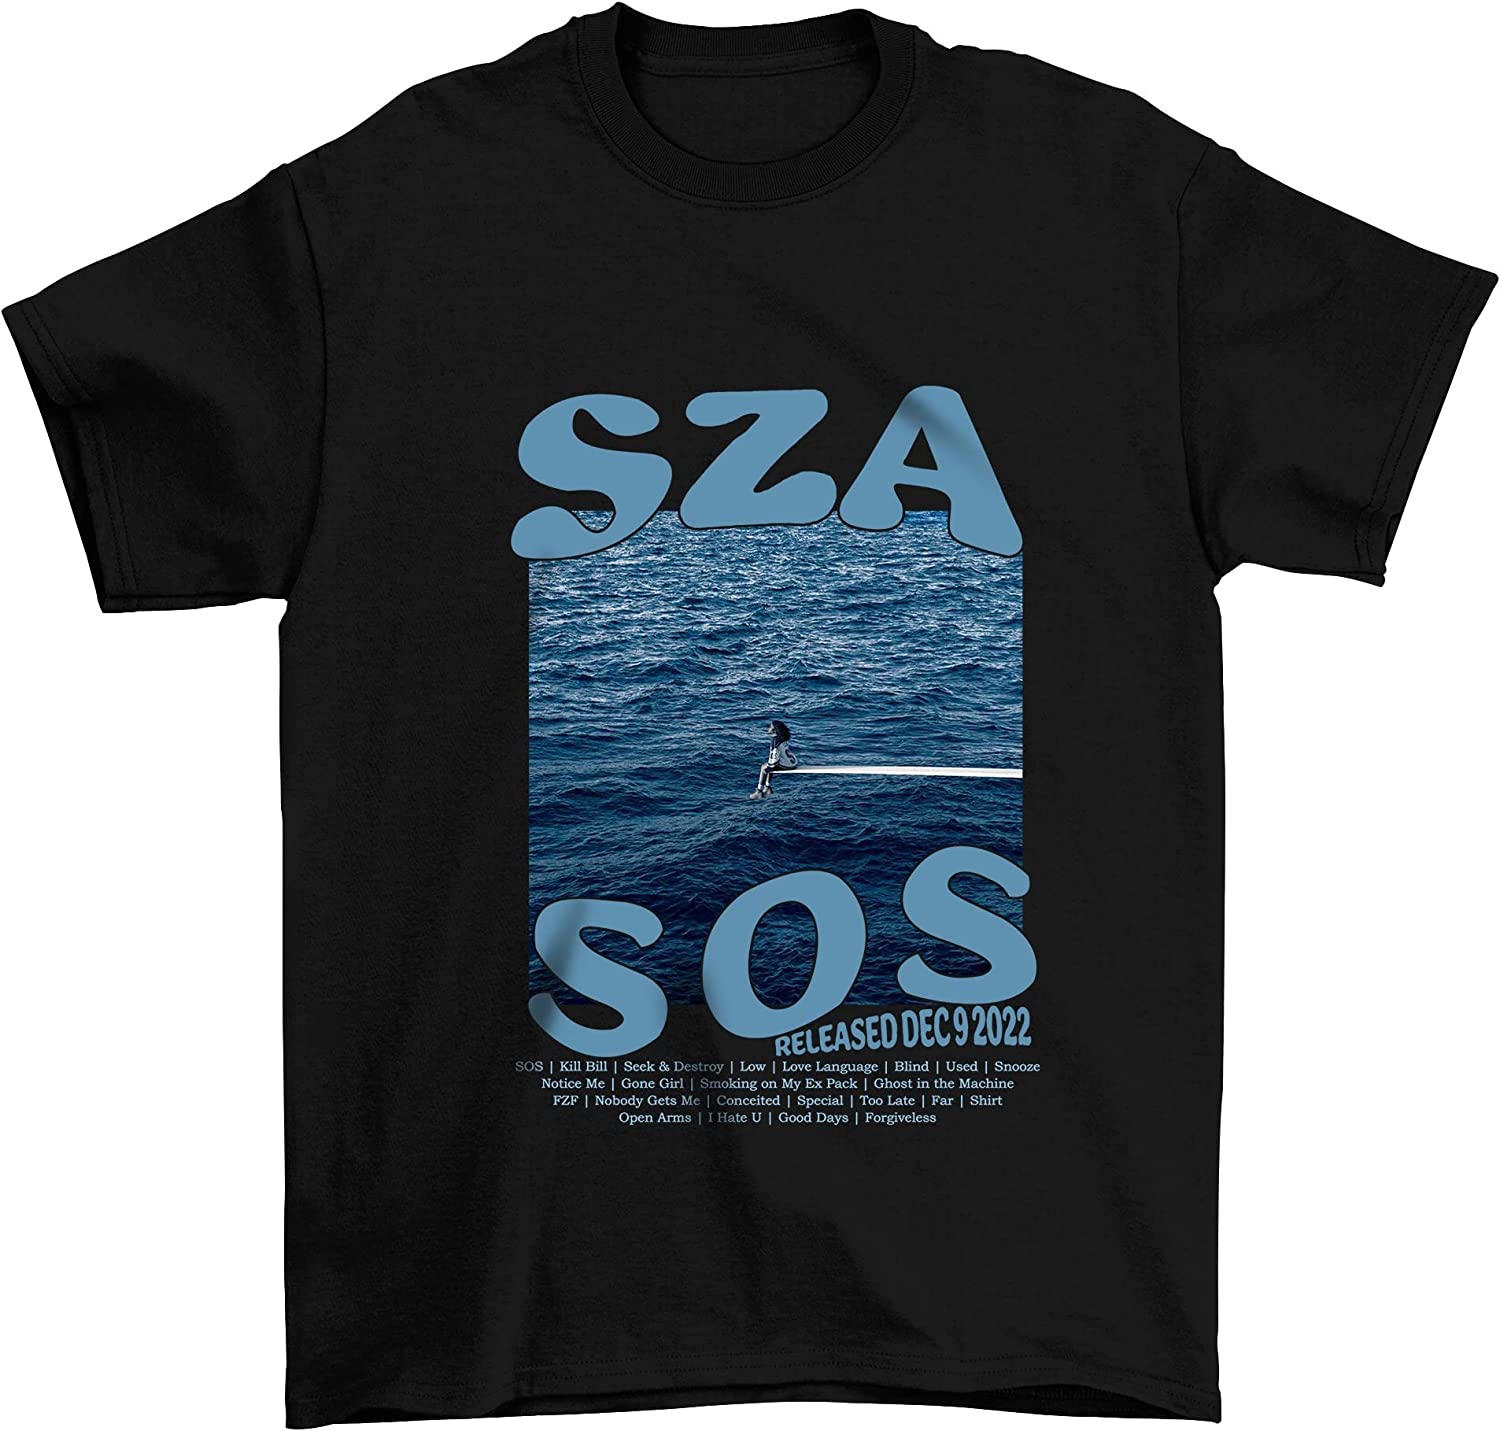 SZA SOS Jersey, Sza - Good Days Graphic Jersey SOS Tour 2023